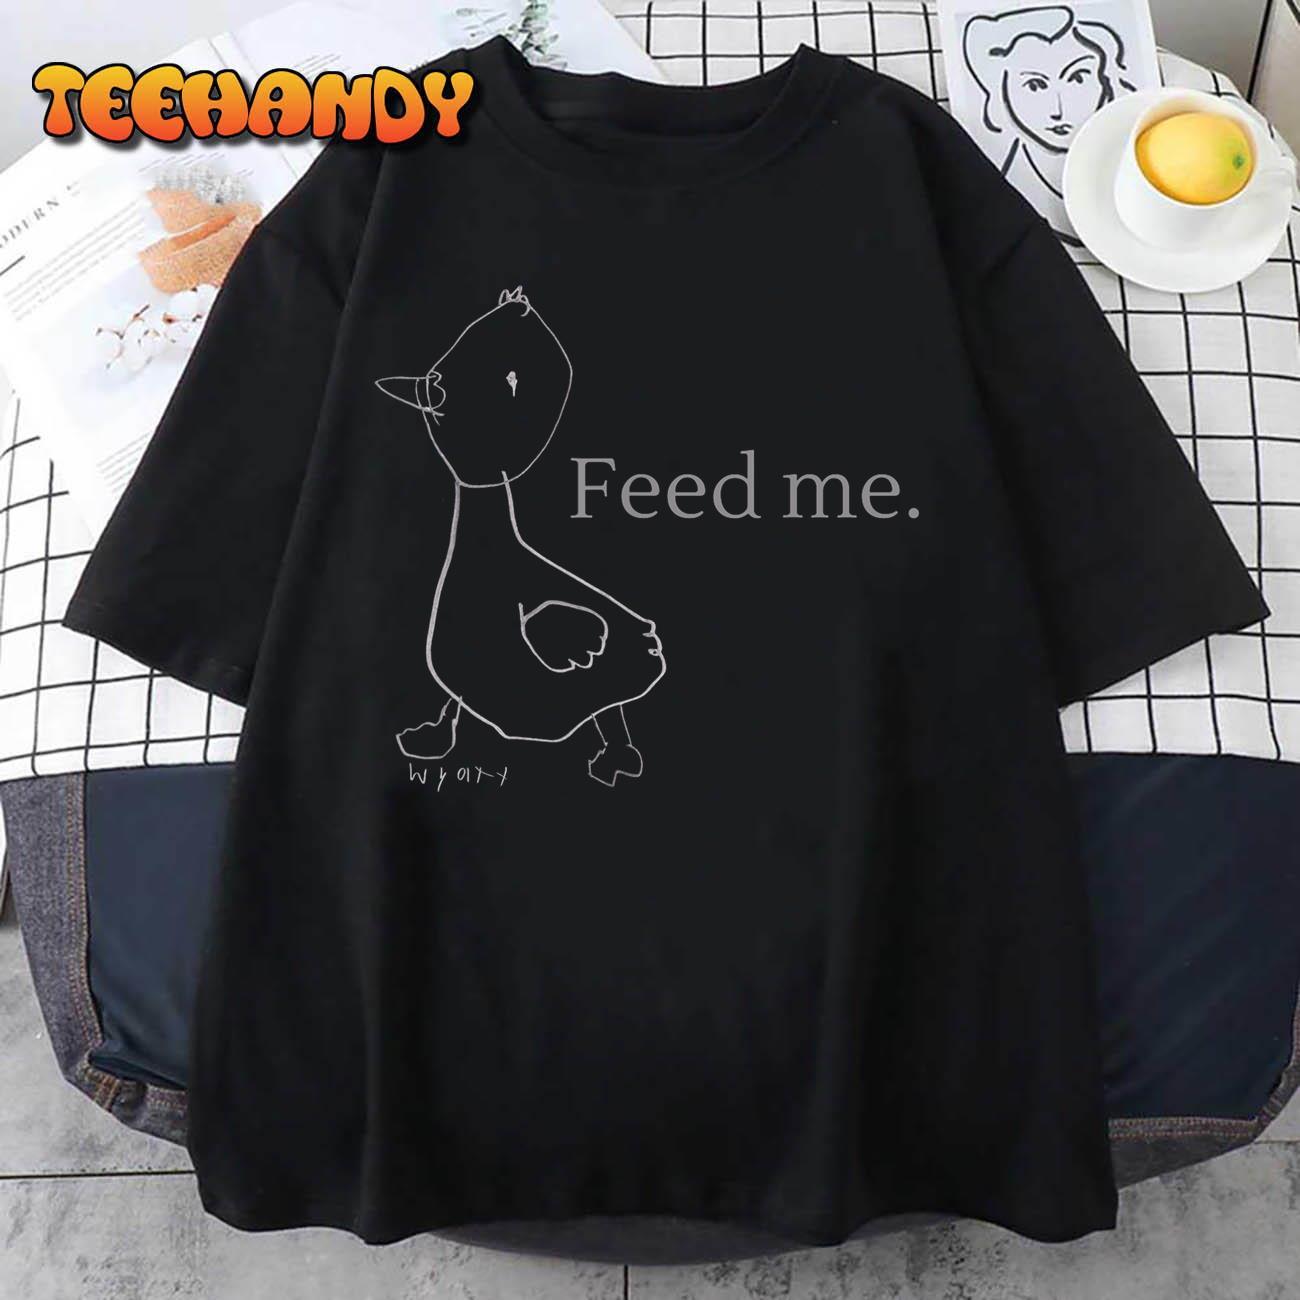 Feed Me T-Shirt